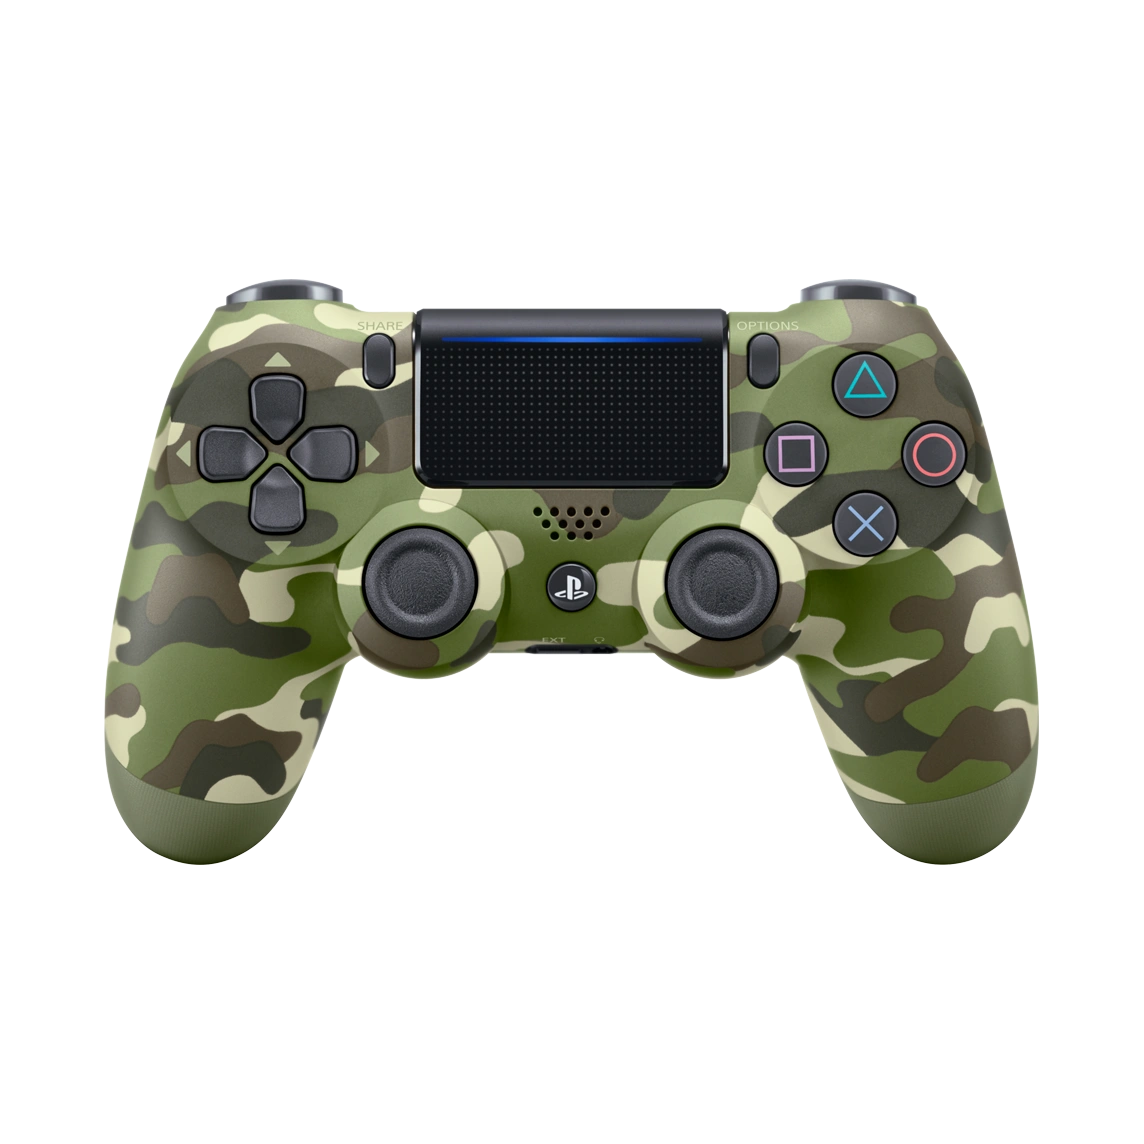 Sony PlayStation 4 DualShock Wireless Controller Army